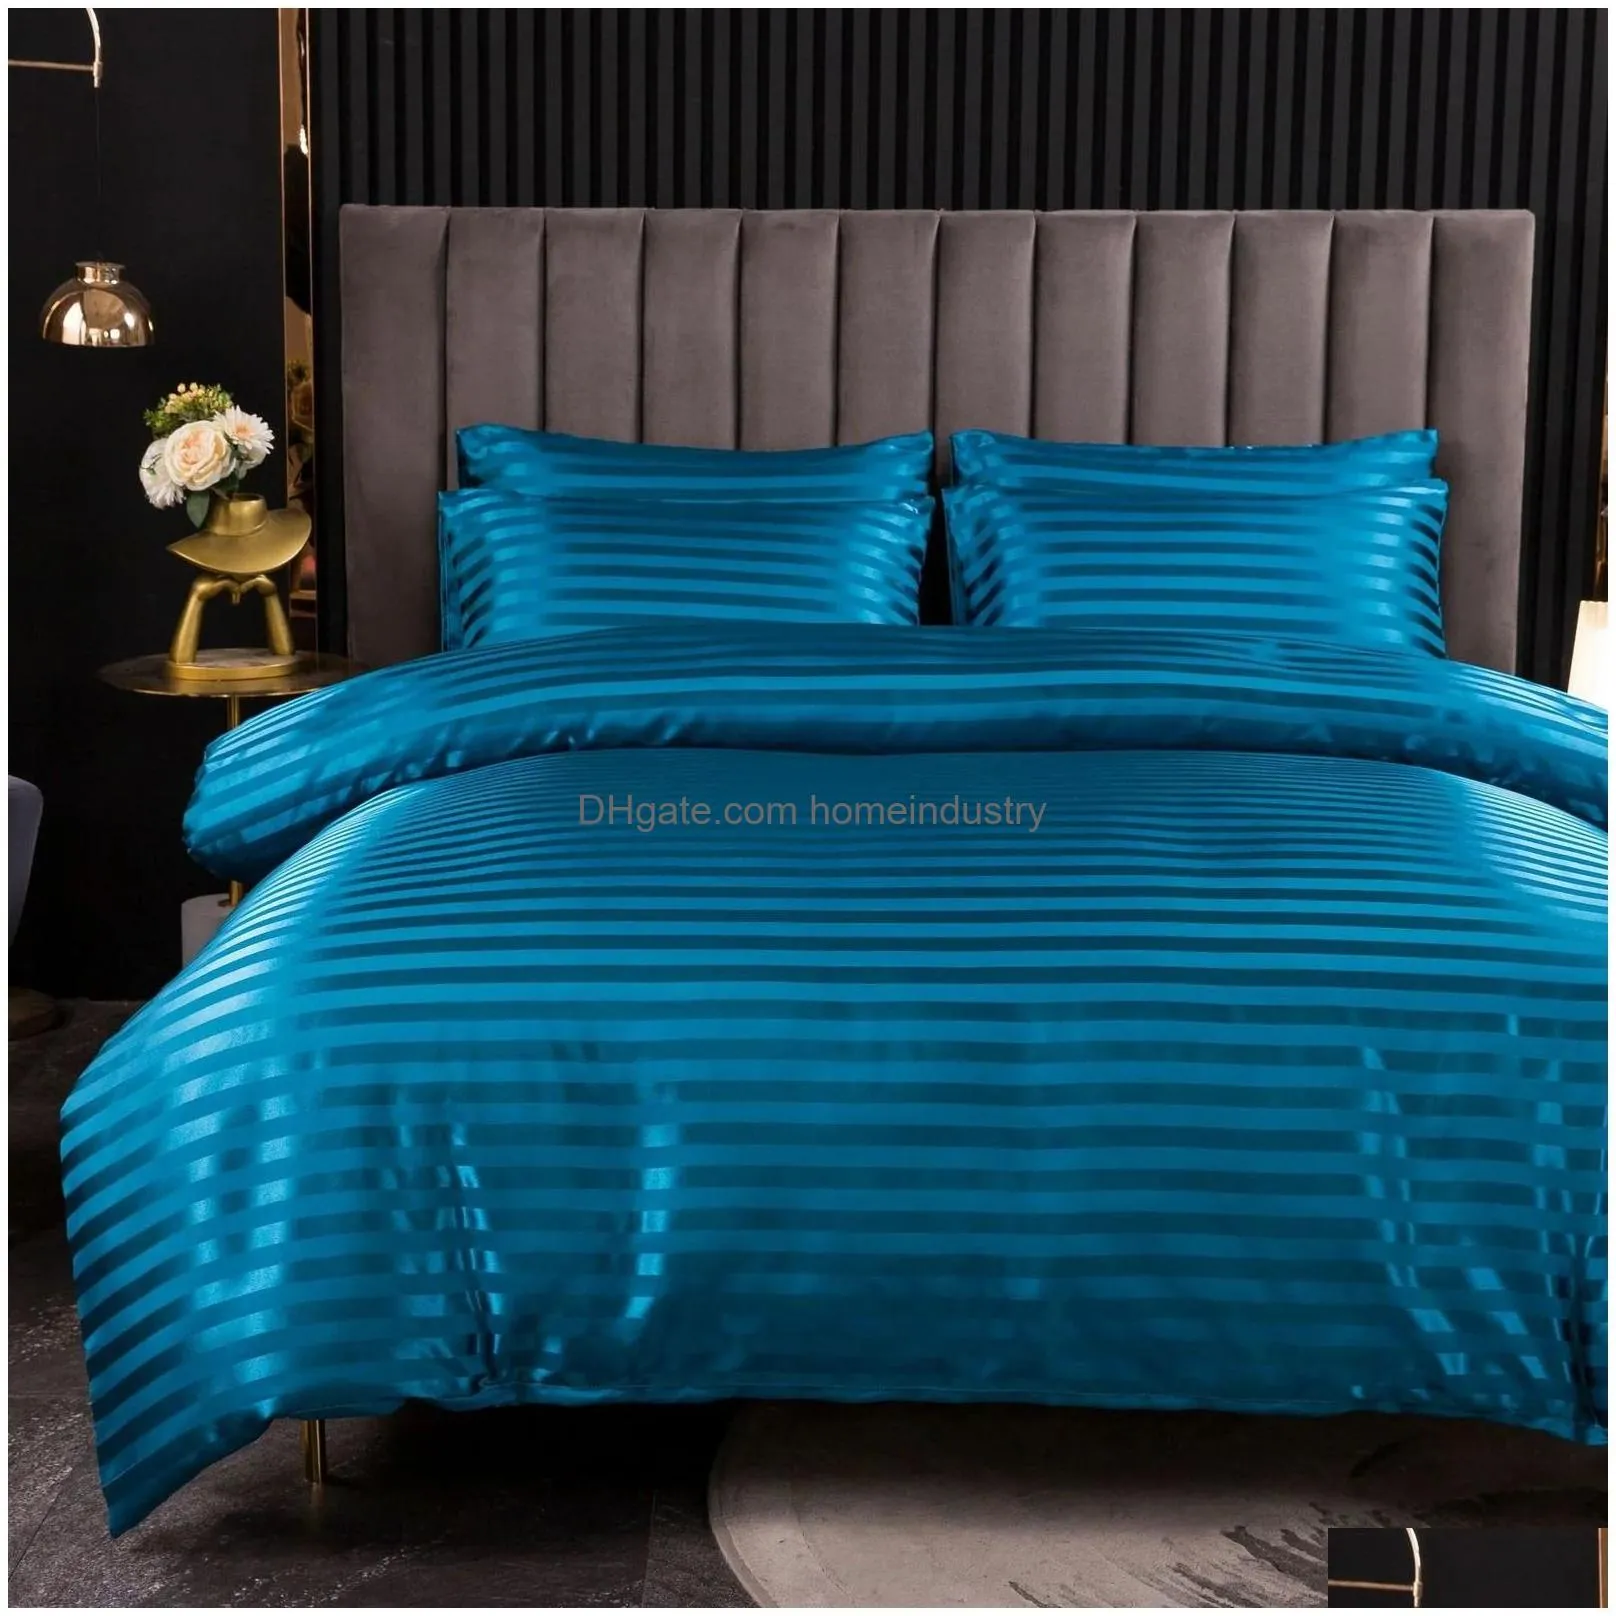 Bedding Sets Satin Duvet Er Twin Fl Queen King Size Stripes Soft Cozy Bed Linen Solid Color Quilt Luxury Set 231025 Drop Delivery Dhoxs